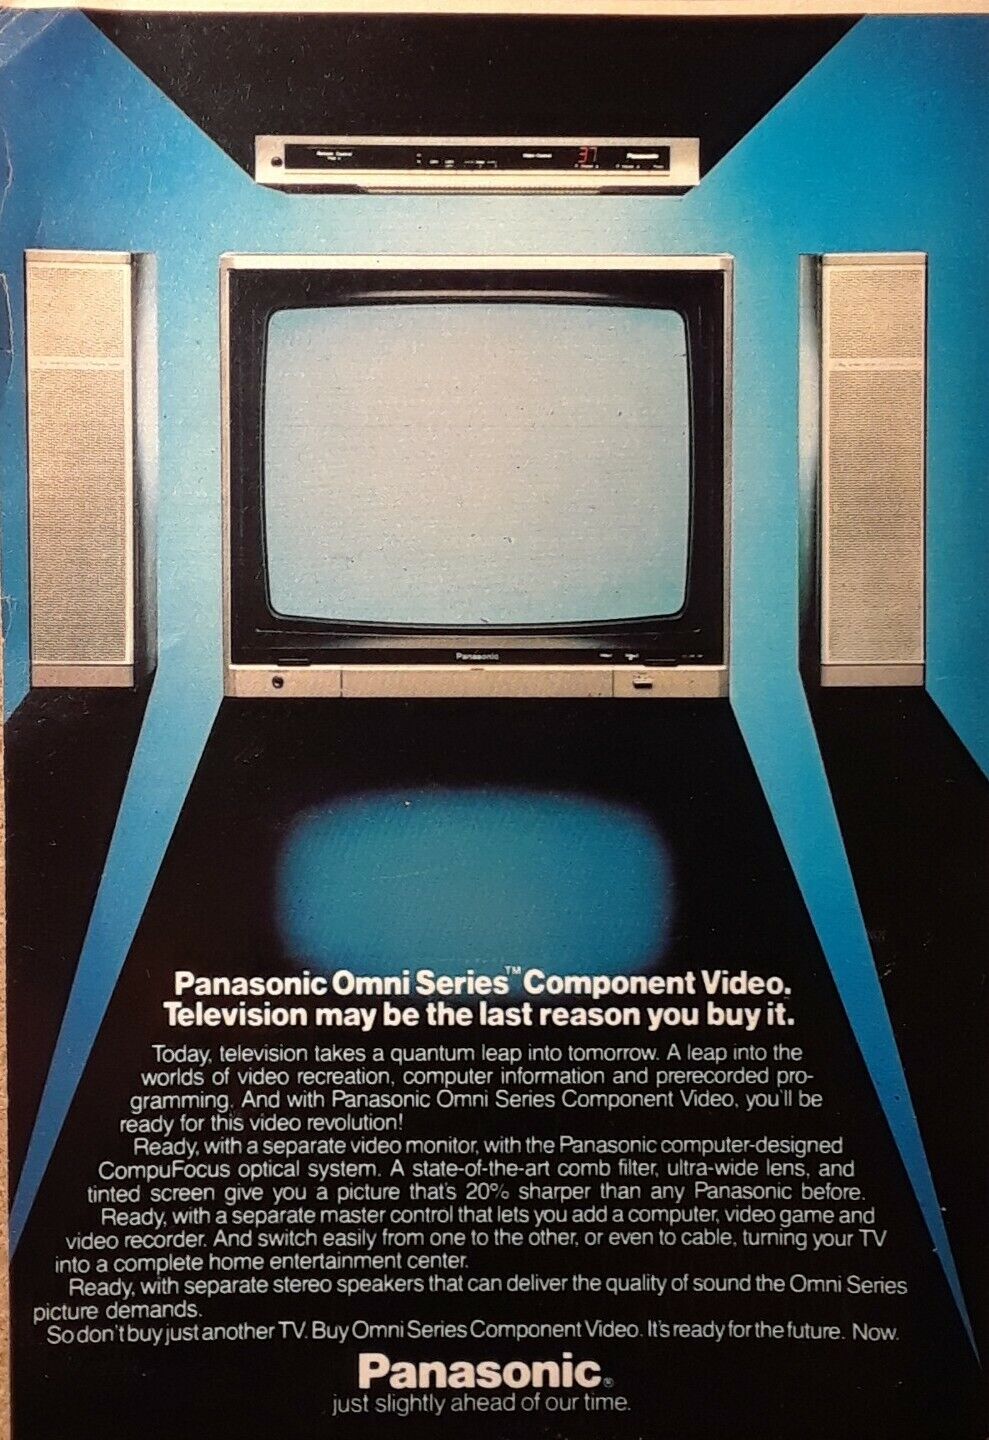 1982 Panasonic Omni Series Print Ad Advertisement 7 3/8 x 5 in.